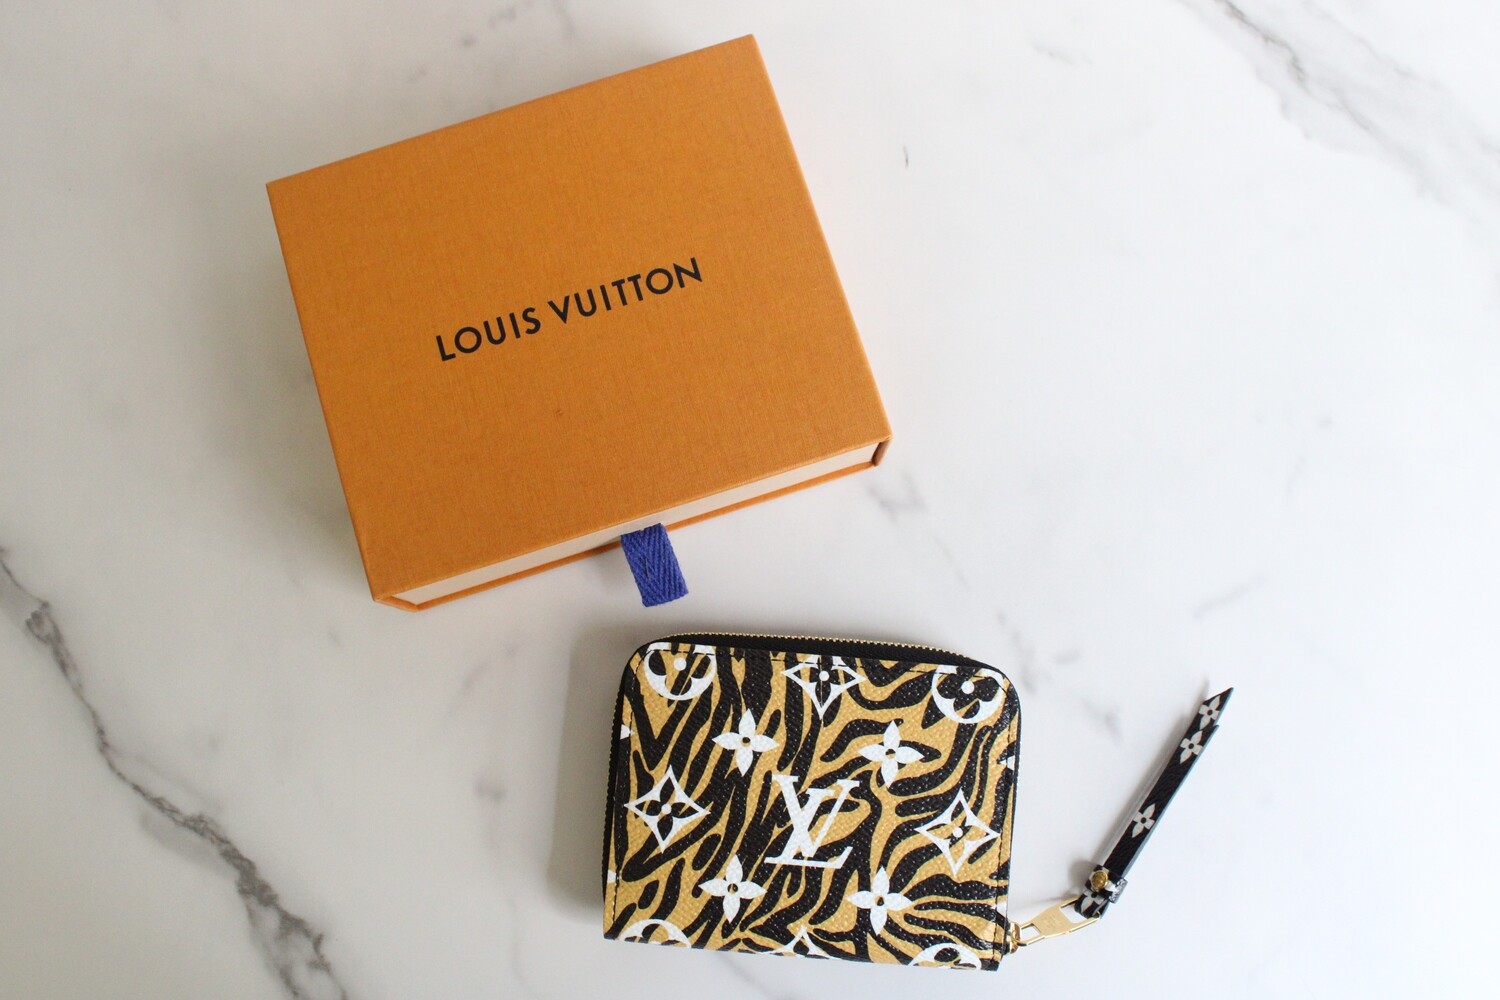 * BOSTON Louis Vuitton SLG Jungle Noir Zippy, New in Box